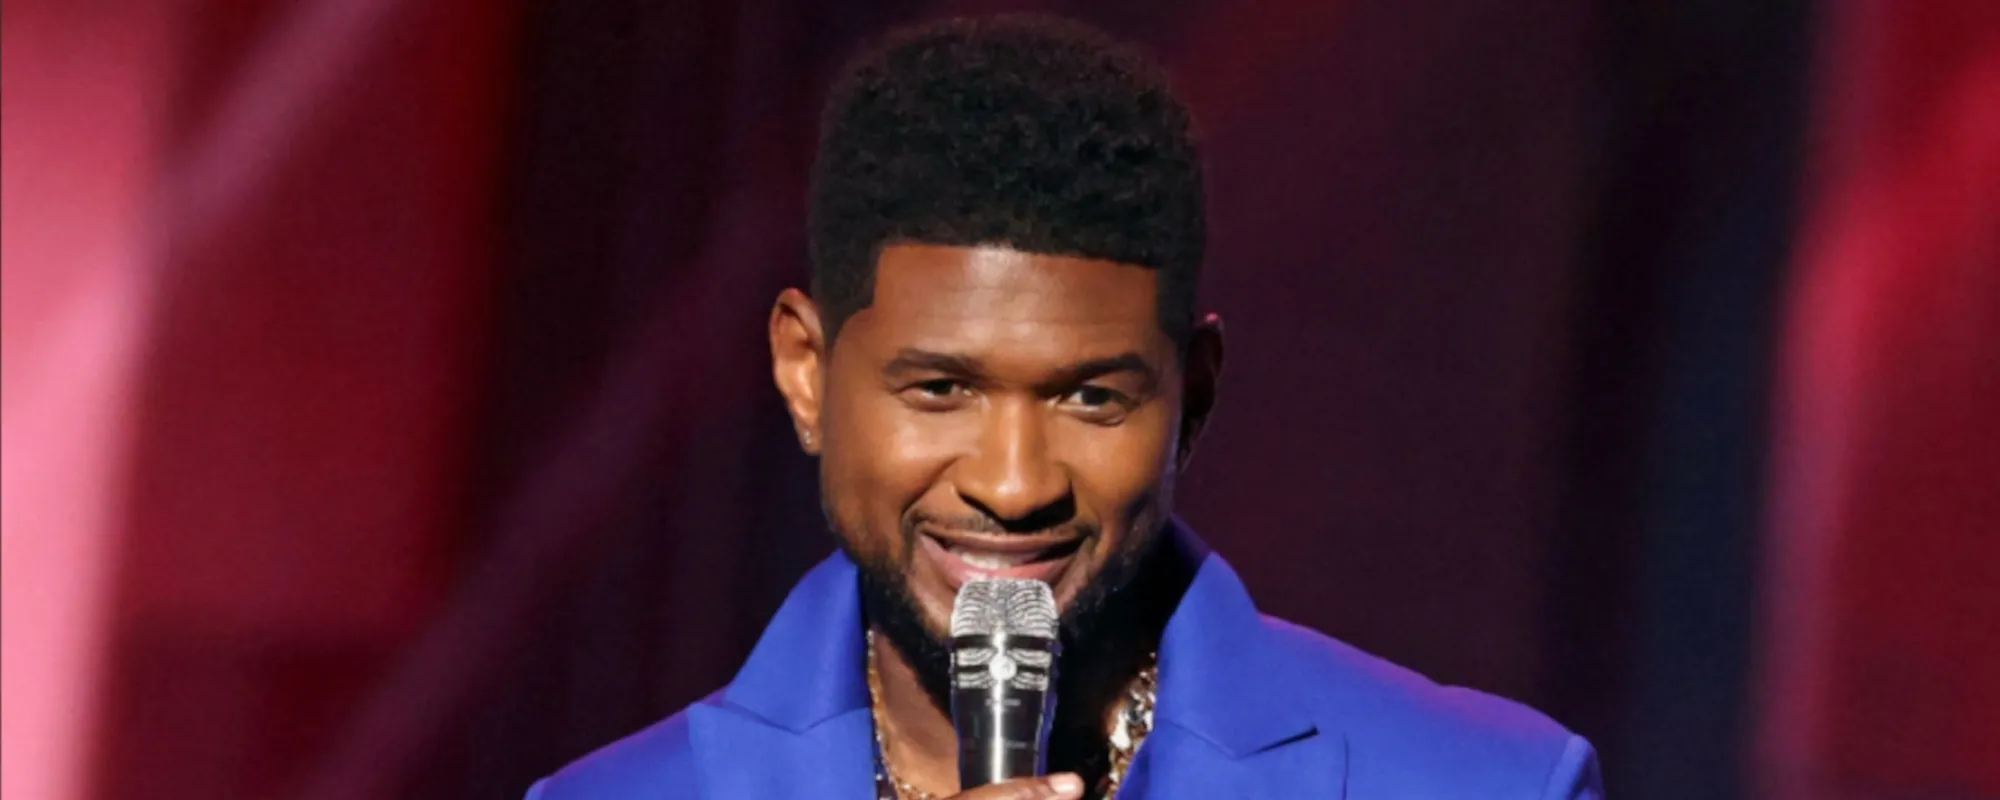 Usher Announces New Album Releasing on Super Bowl Sunday